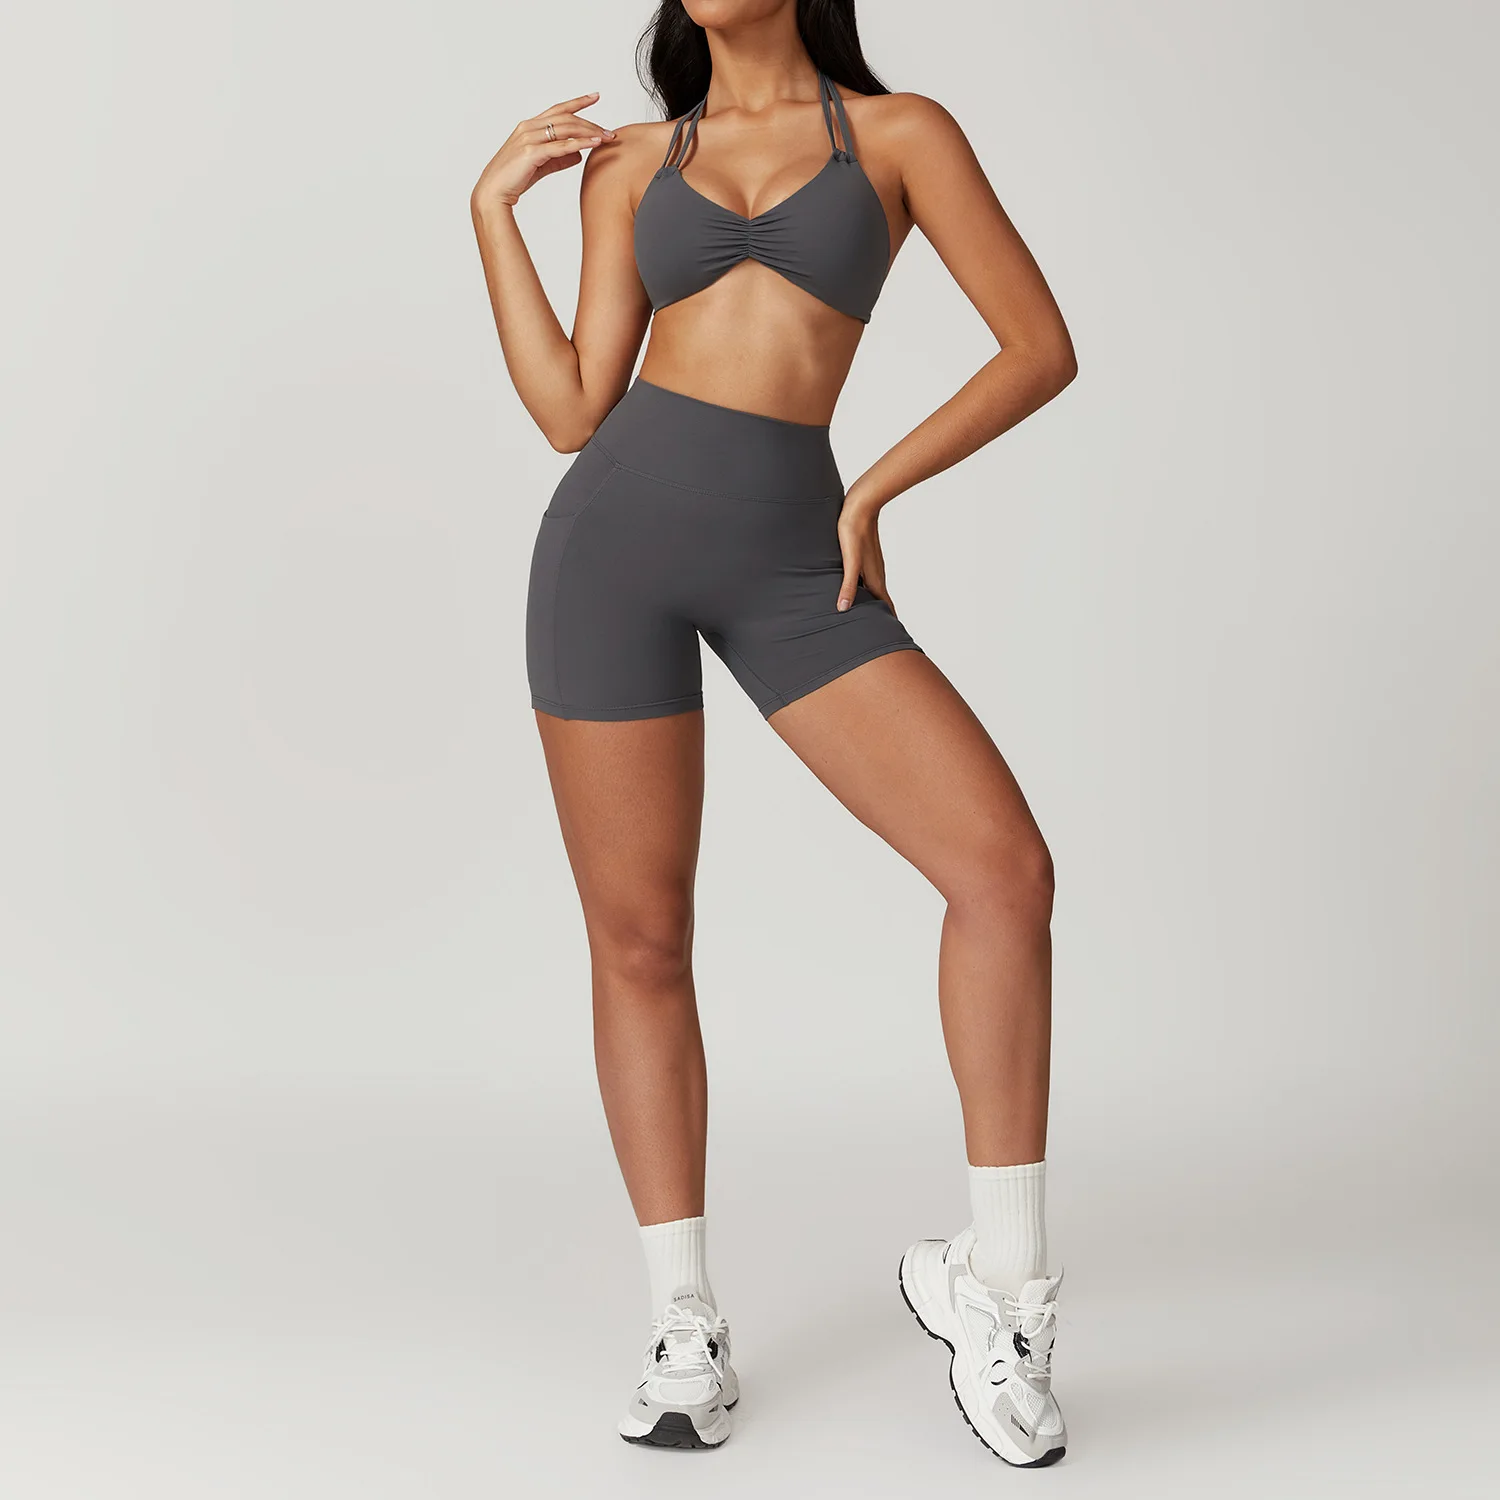 Wholesale Sportswear Clothings 3 Piece Sports Bra Set Gym Fitness Sets Activewear Women Yoga Shorts Sets Fitness Clothing Women